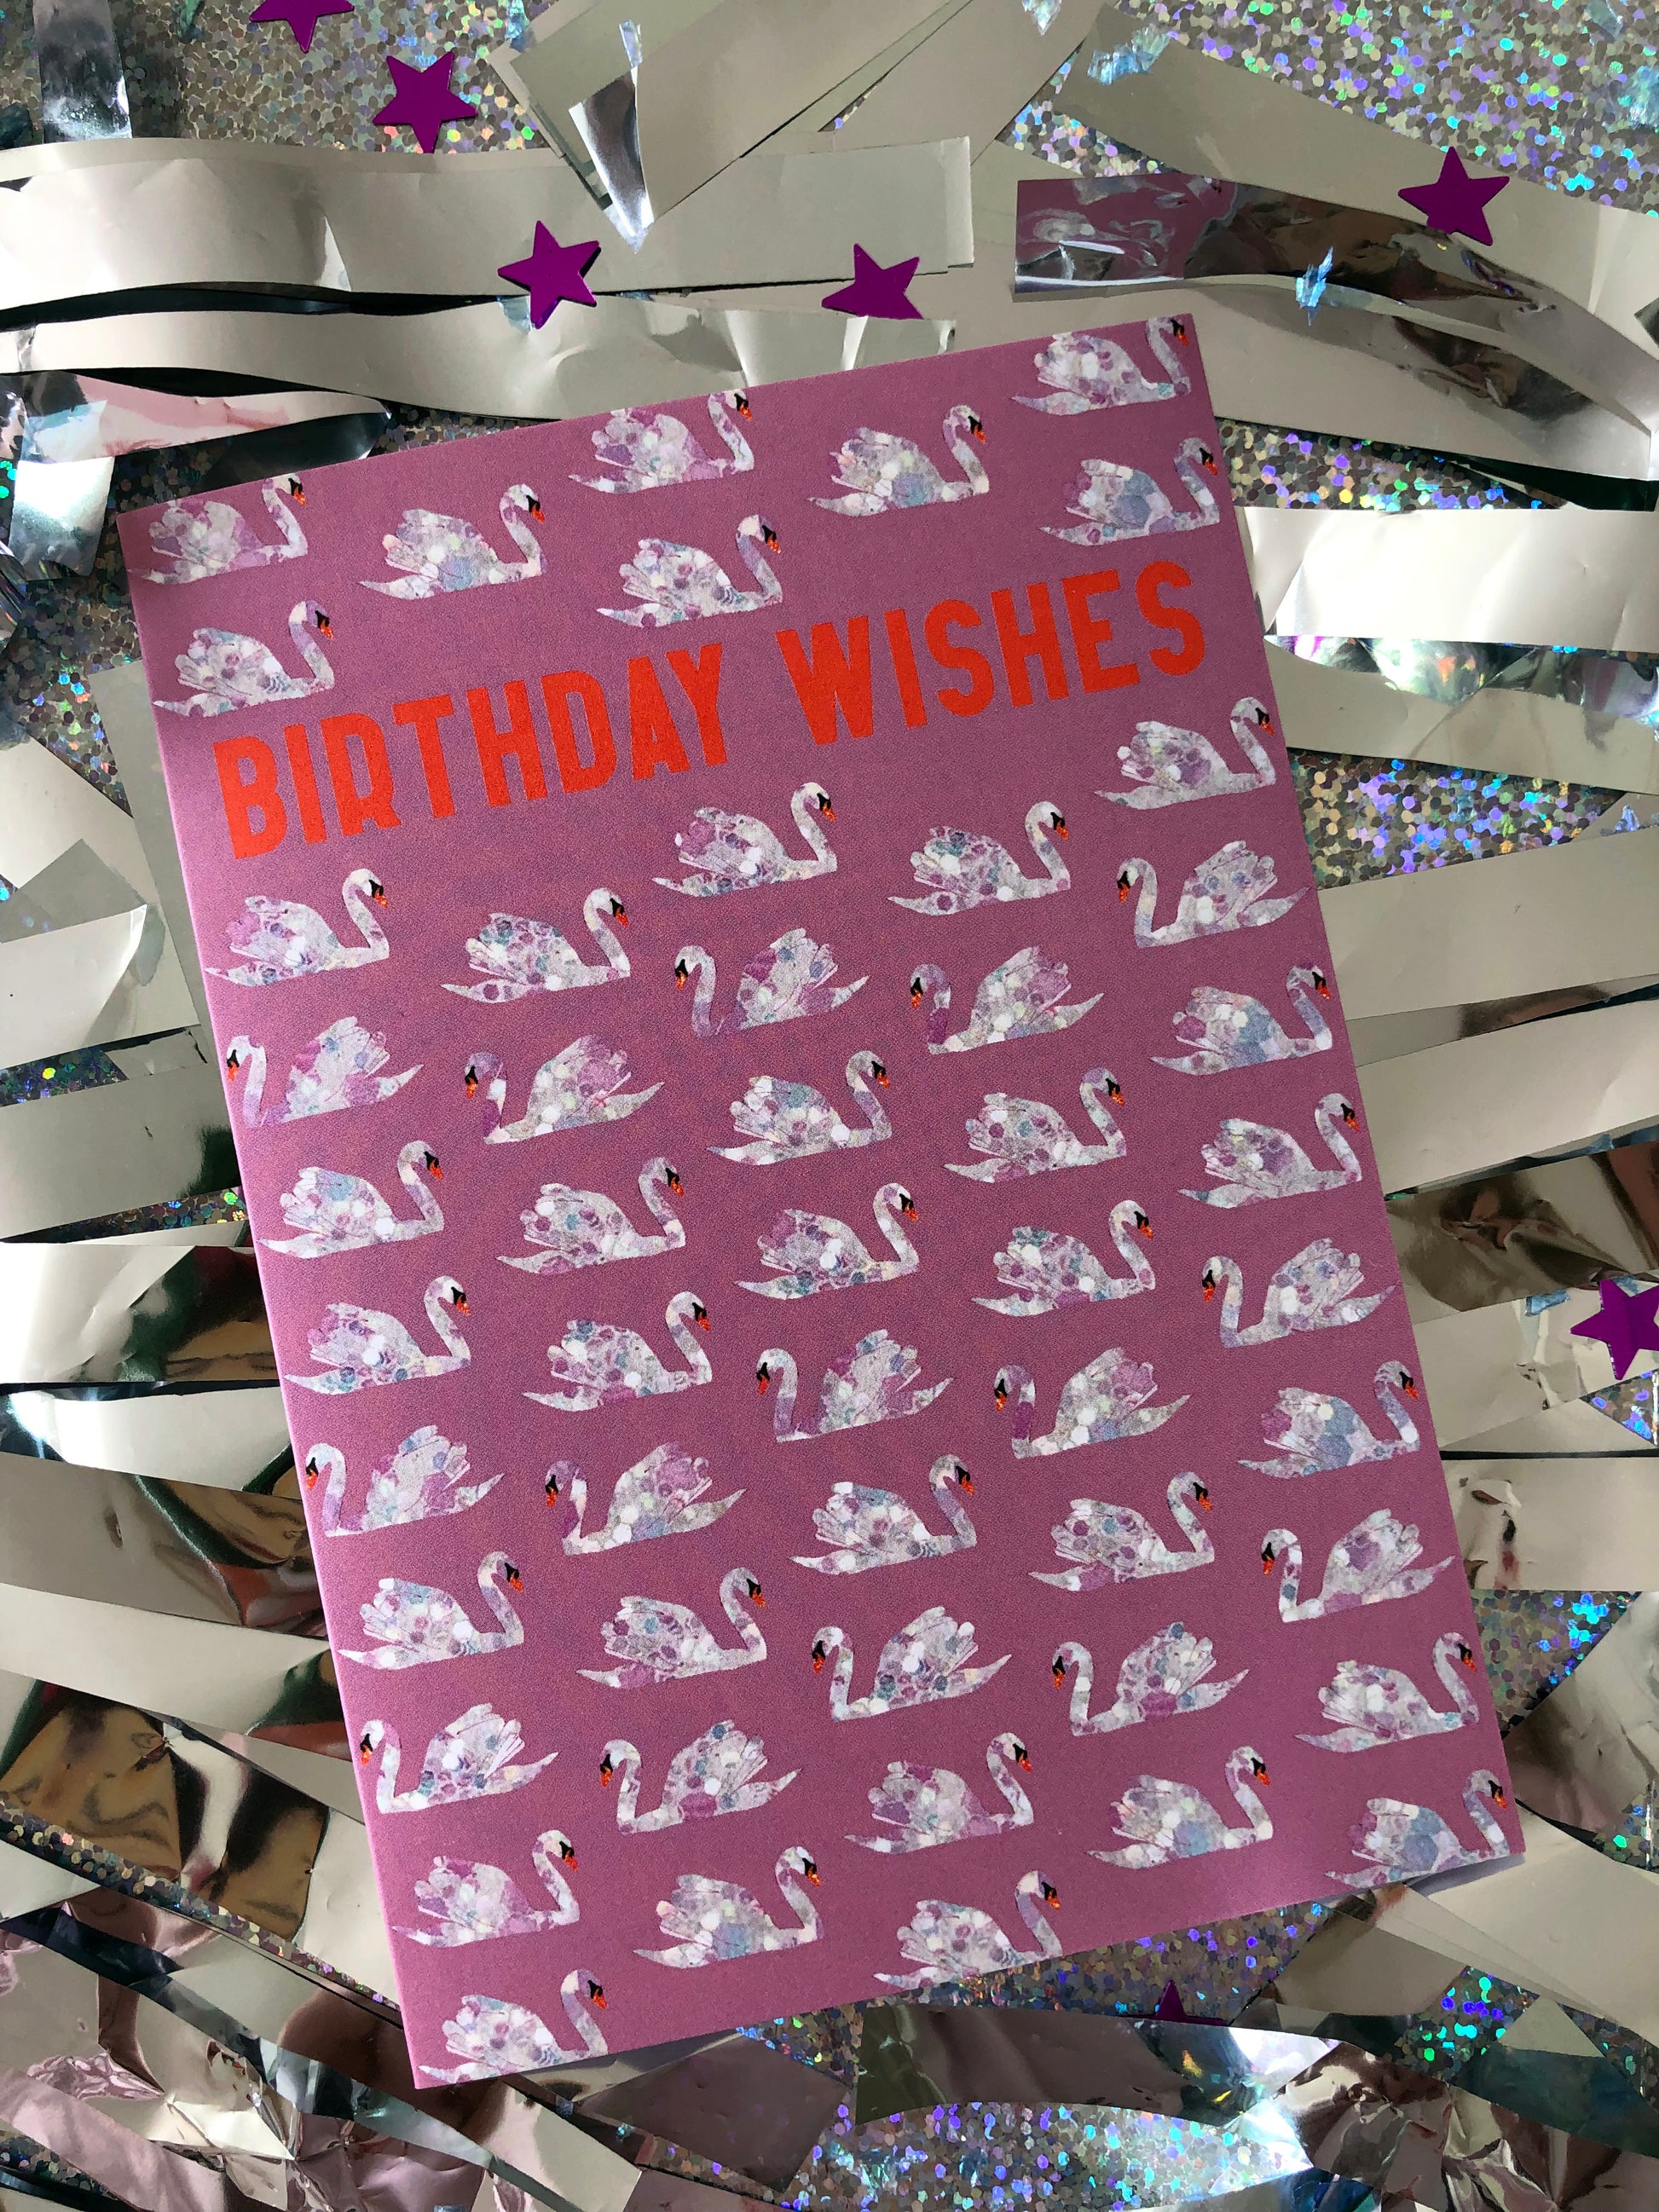 Pretty pink, swan print birthday card.